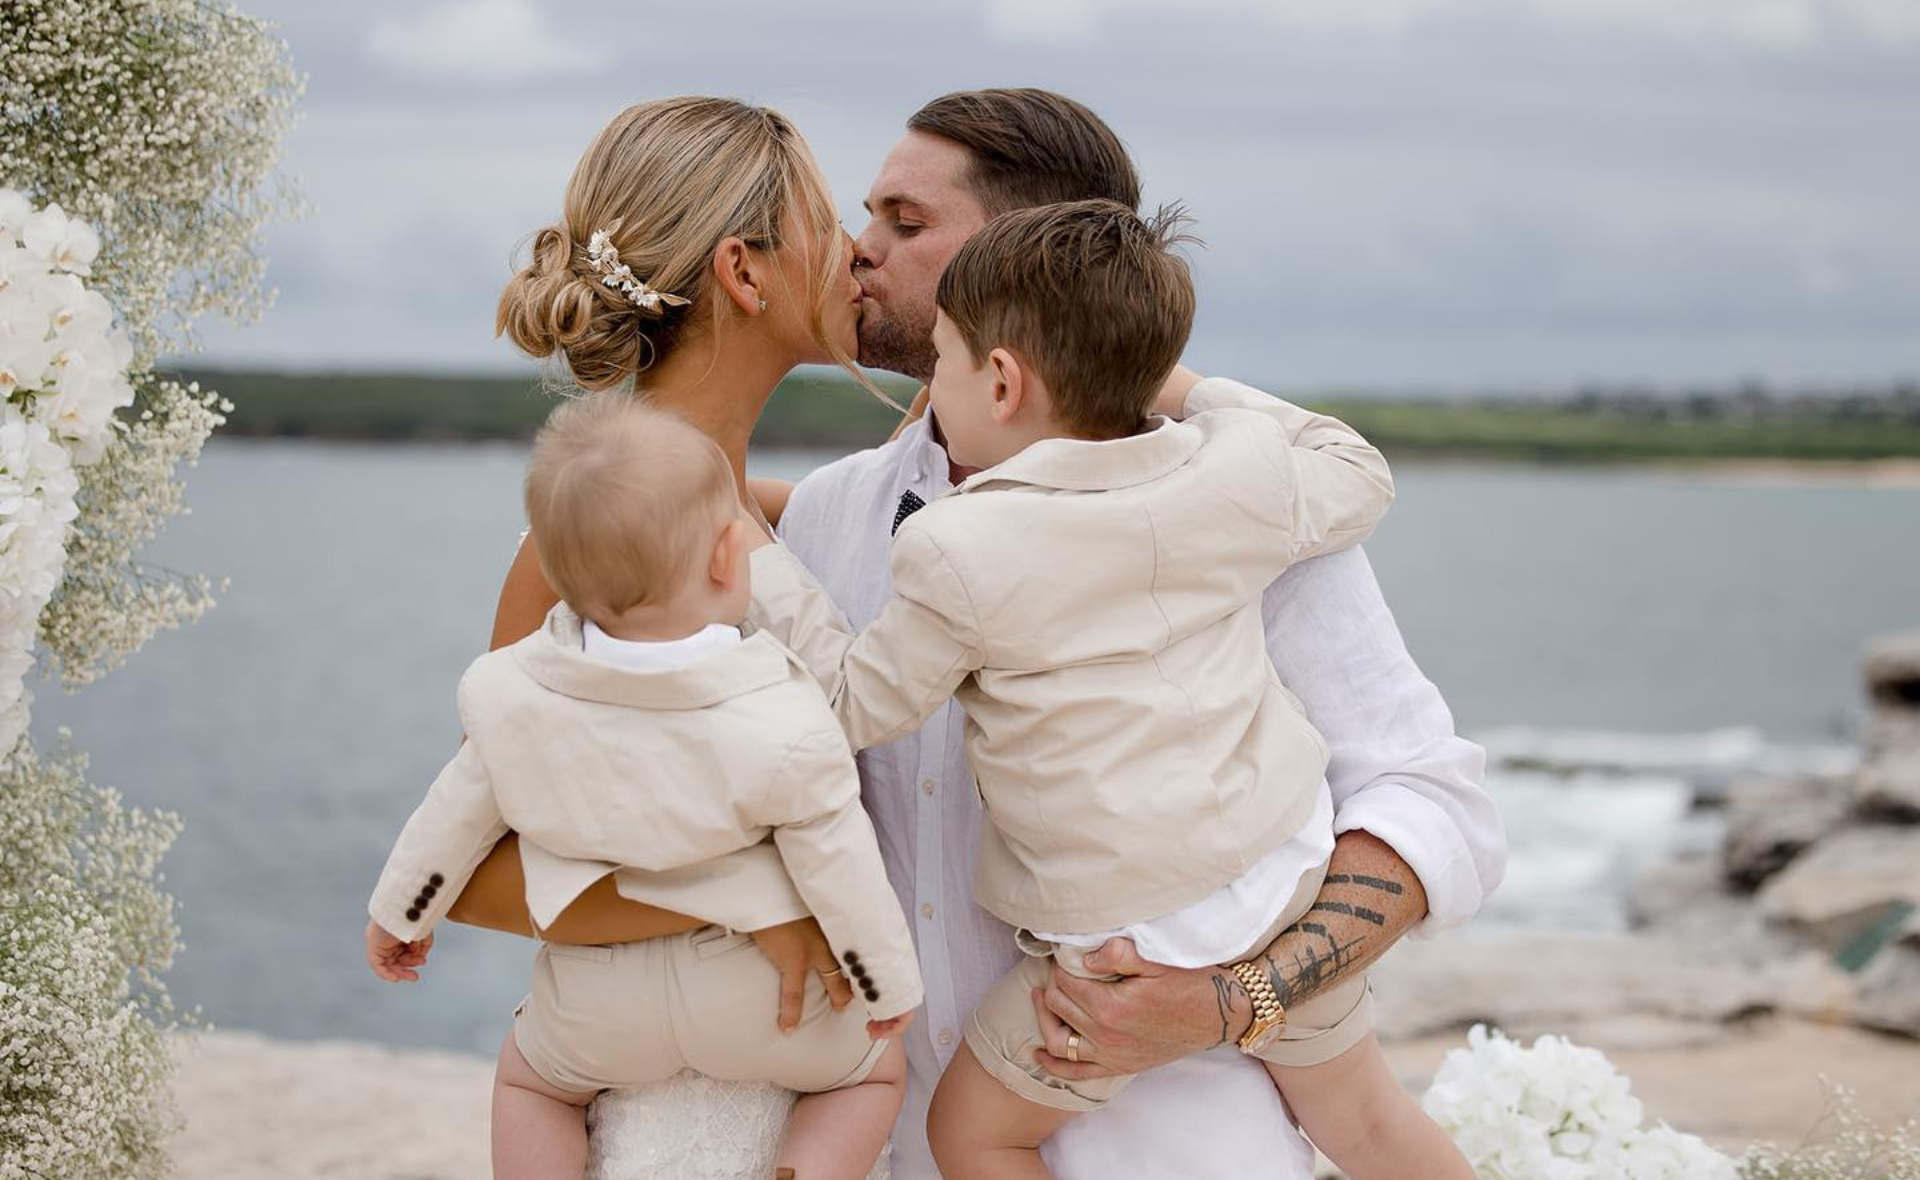 Bondi Rescue star marries in romantic oceanside ceremony